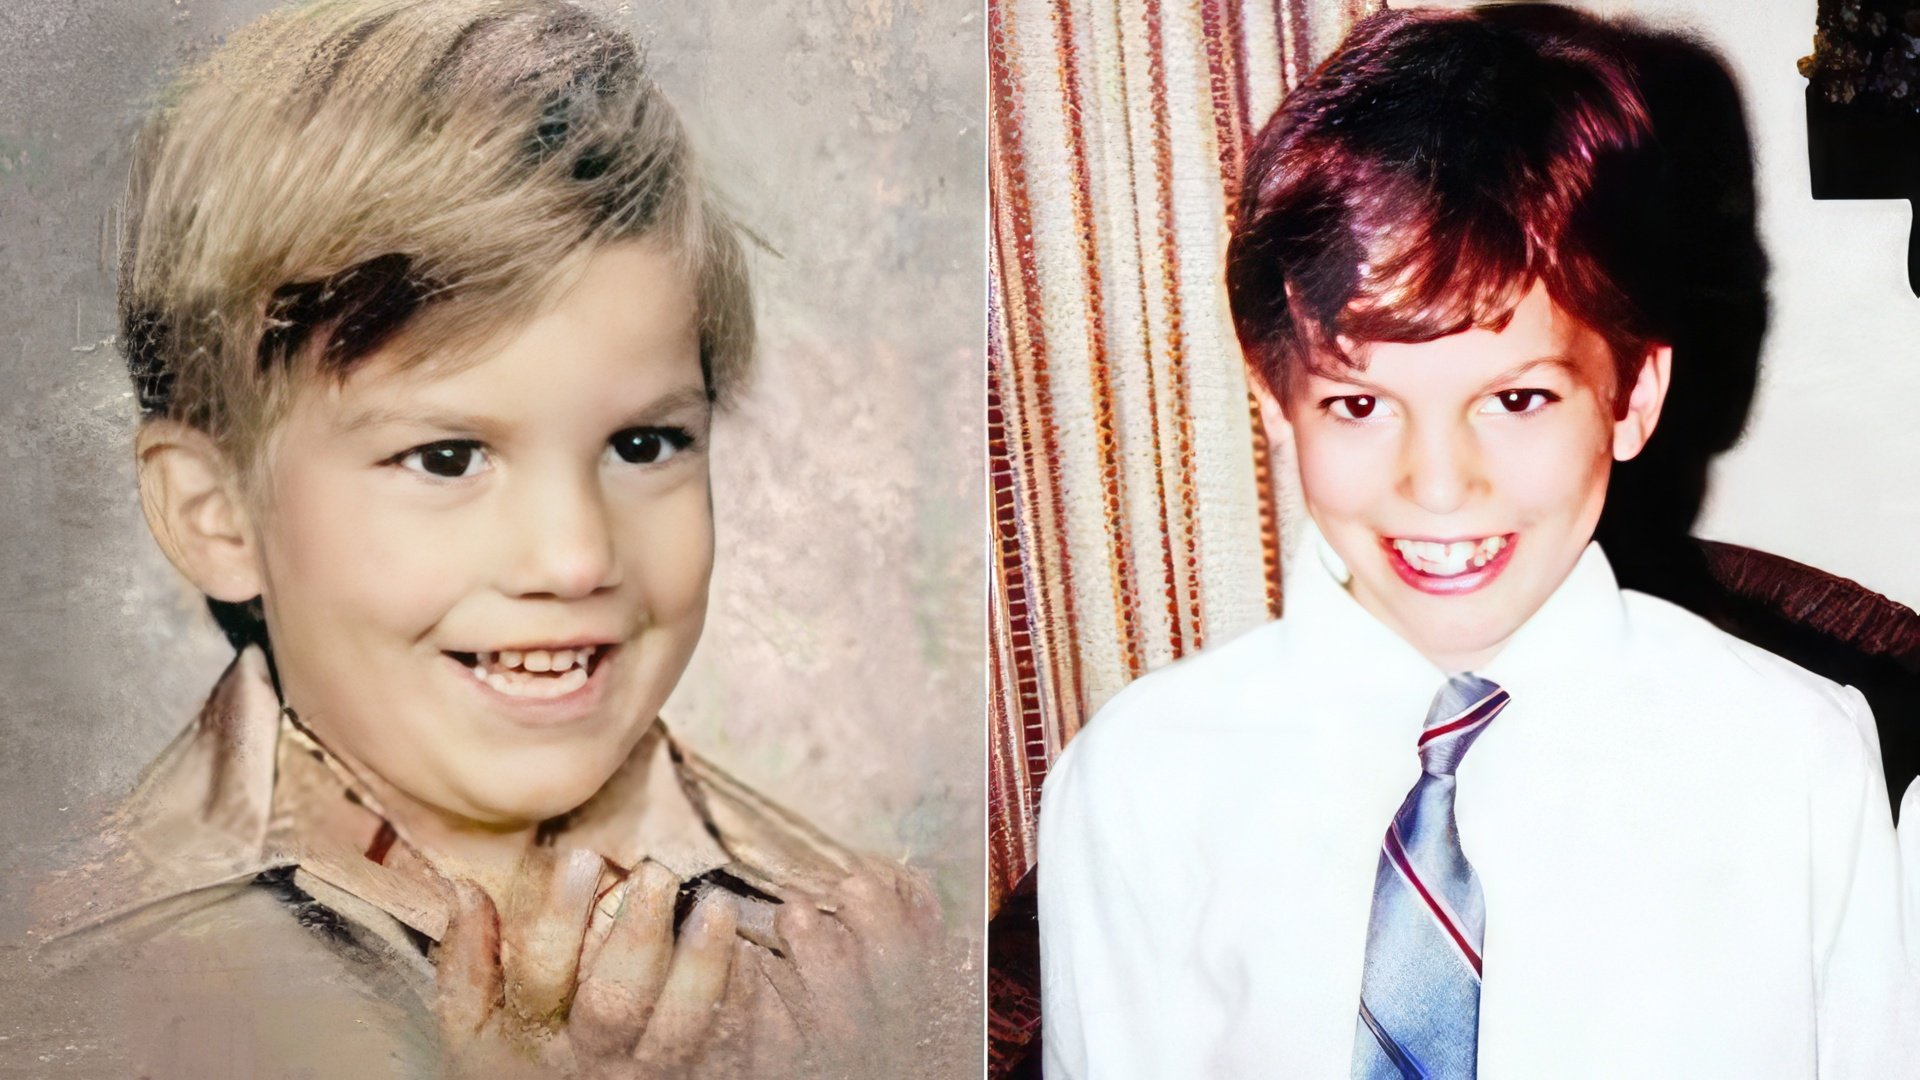 Ashton Kutcher as a child